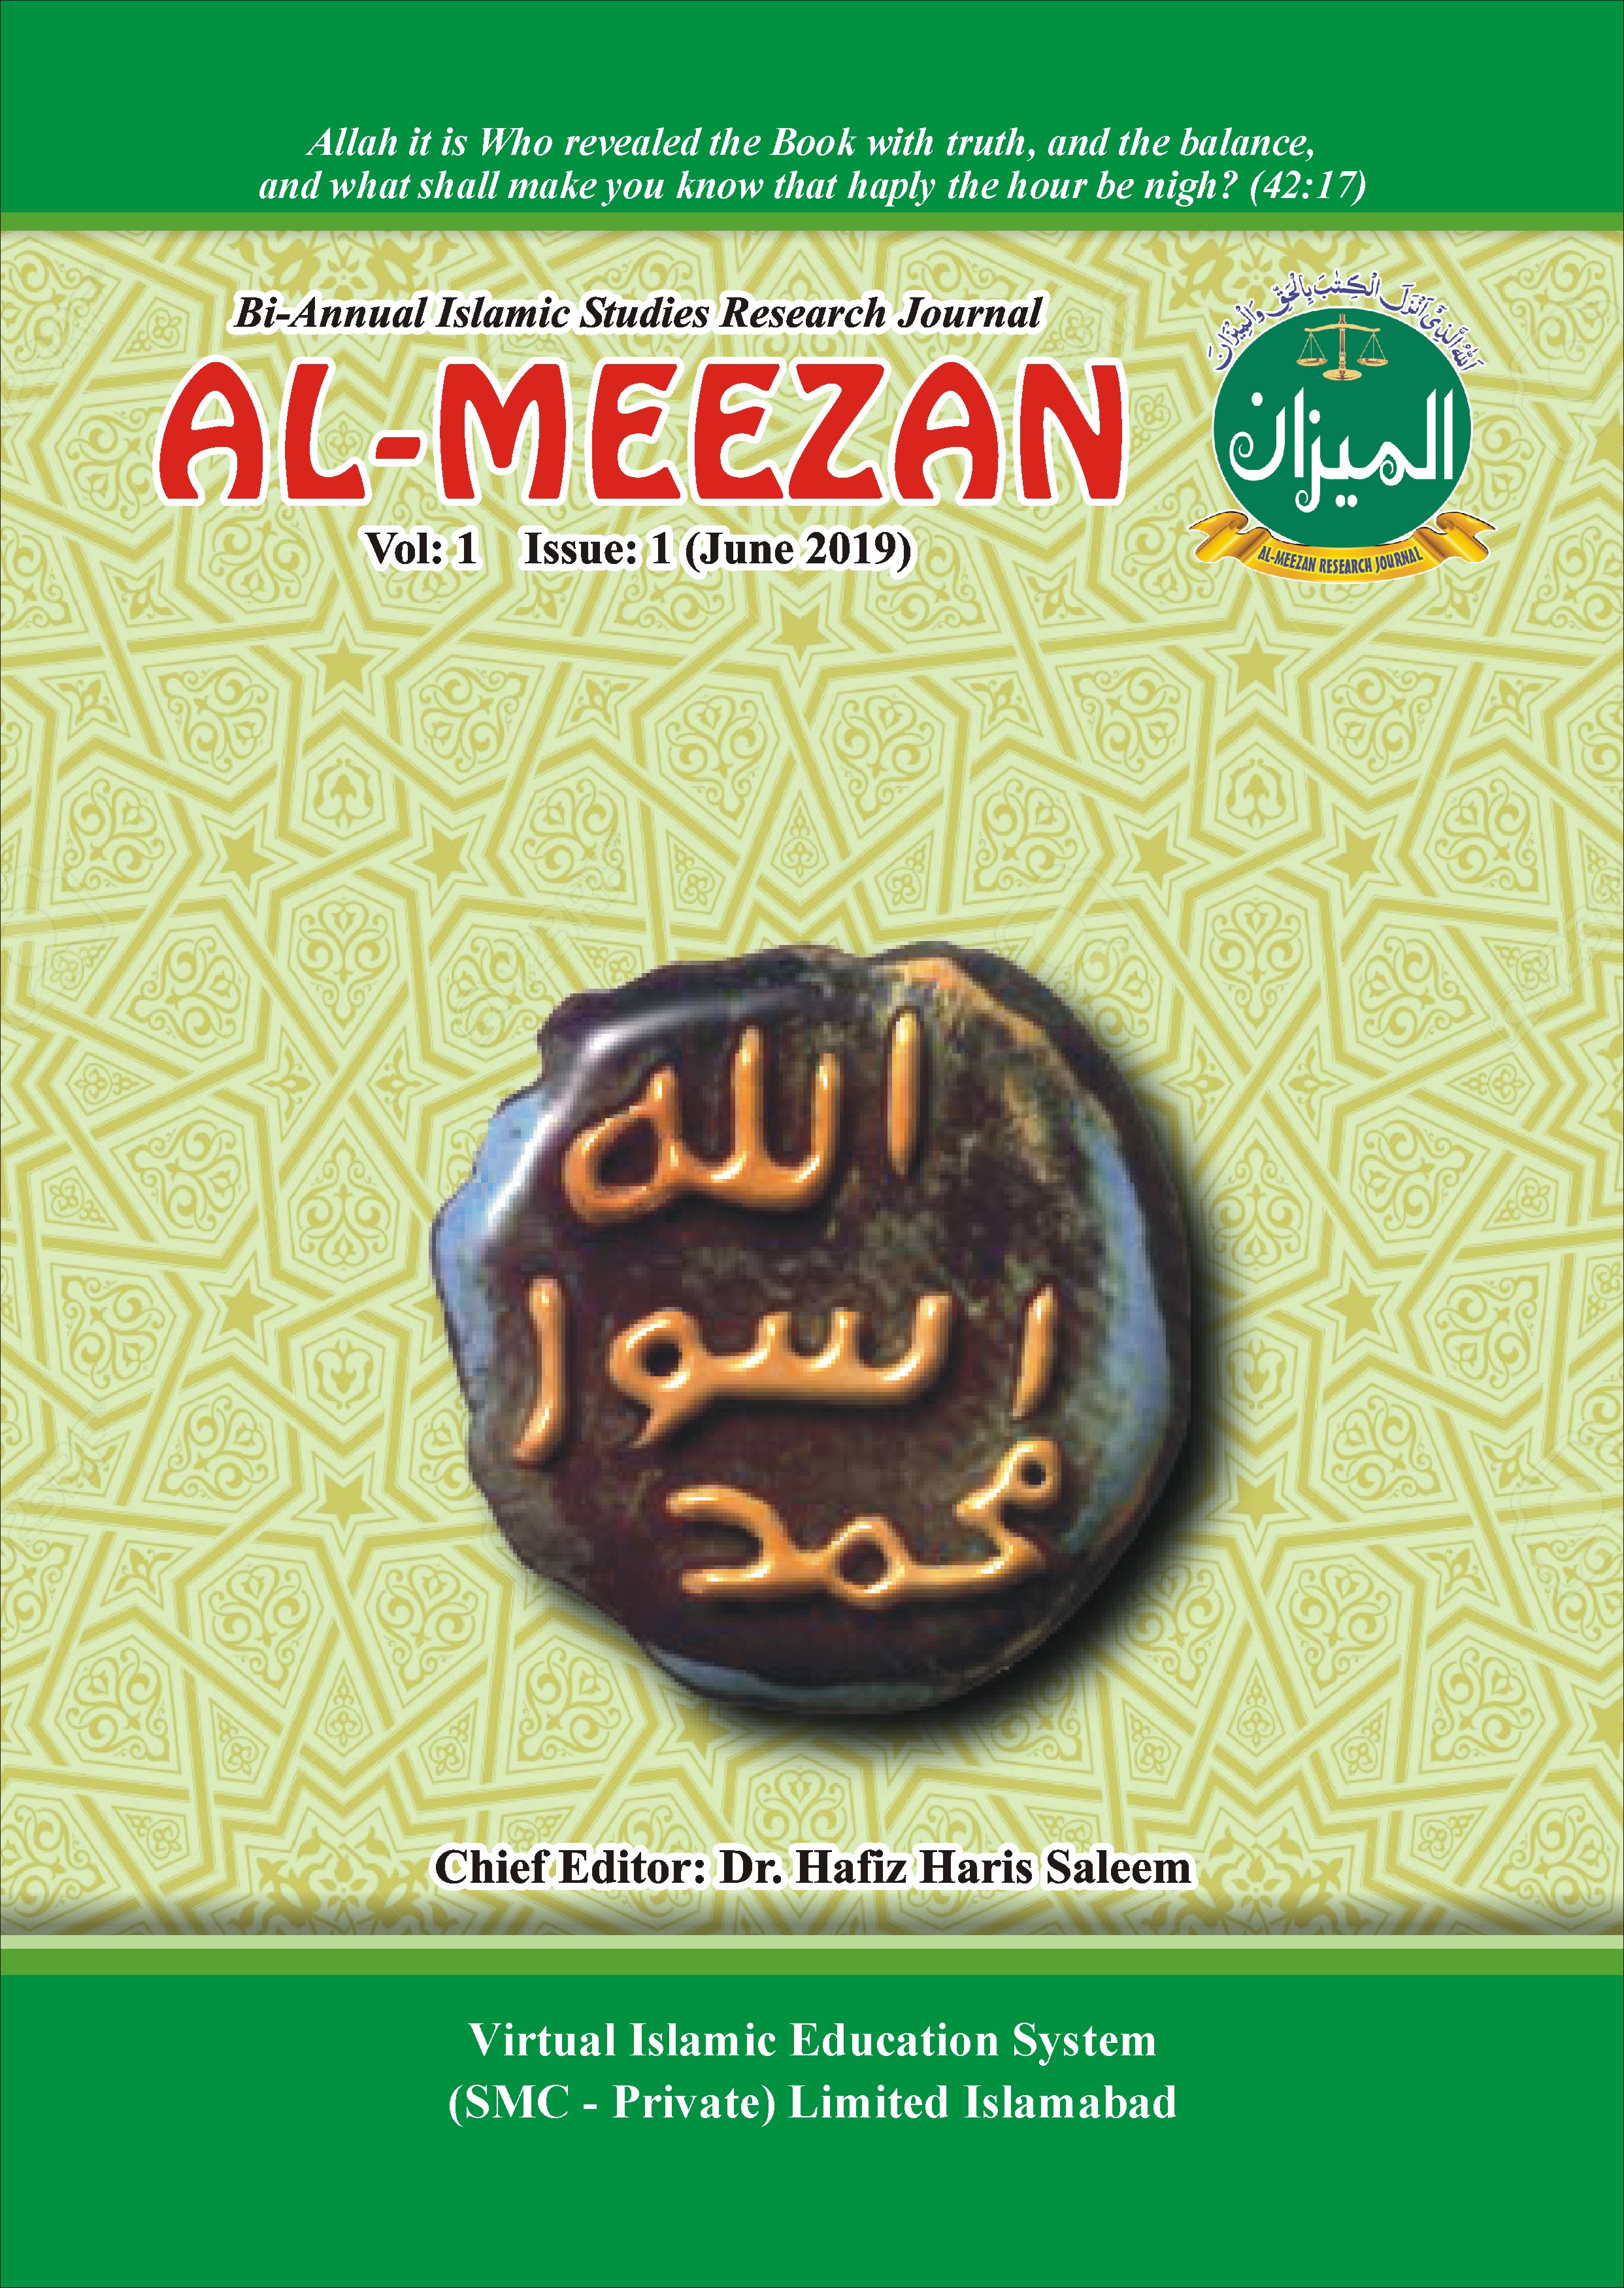 AL-MEEZAN